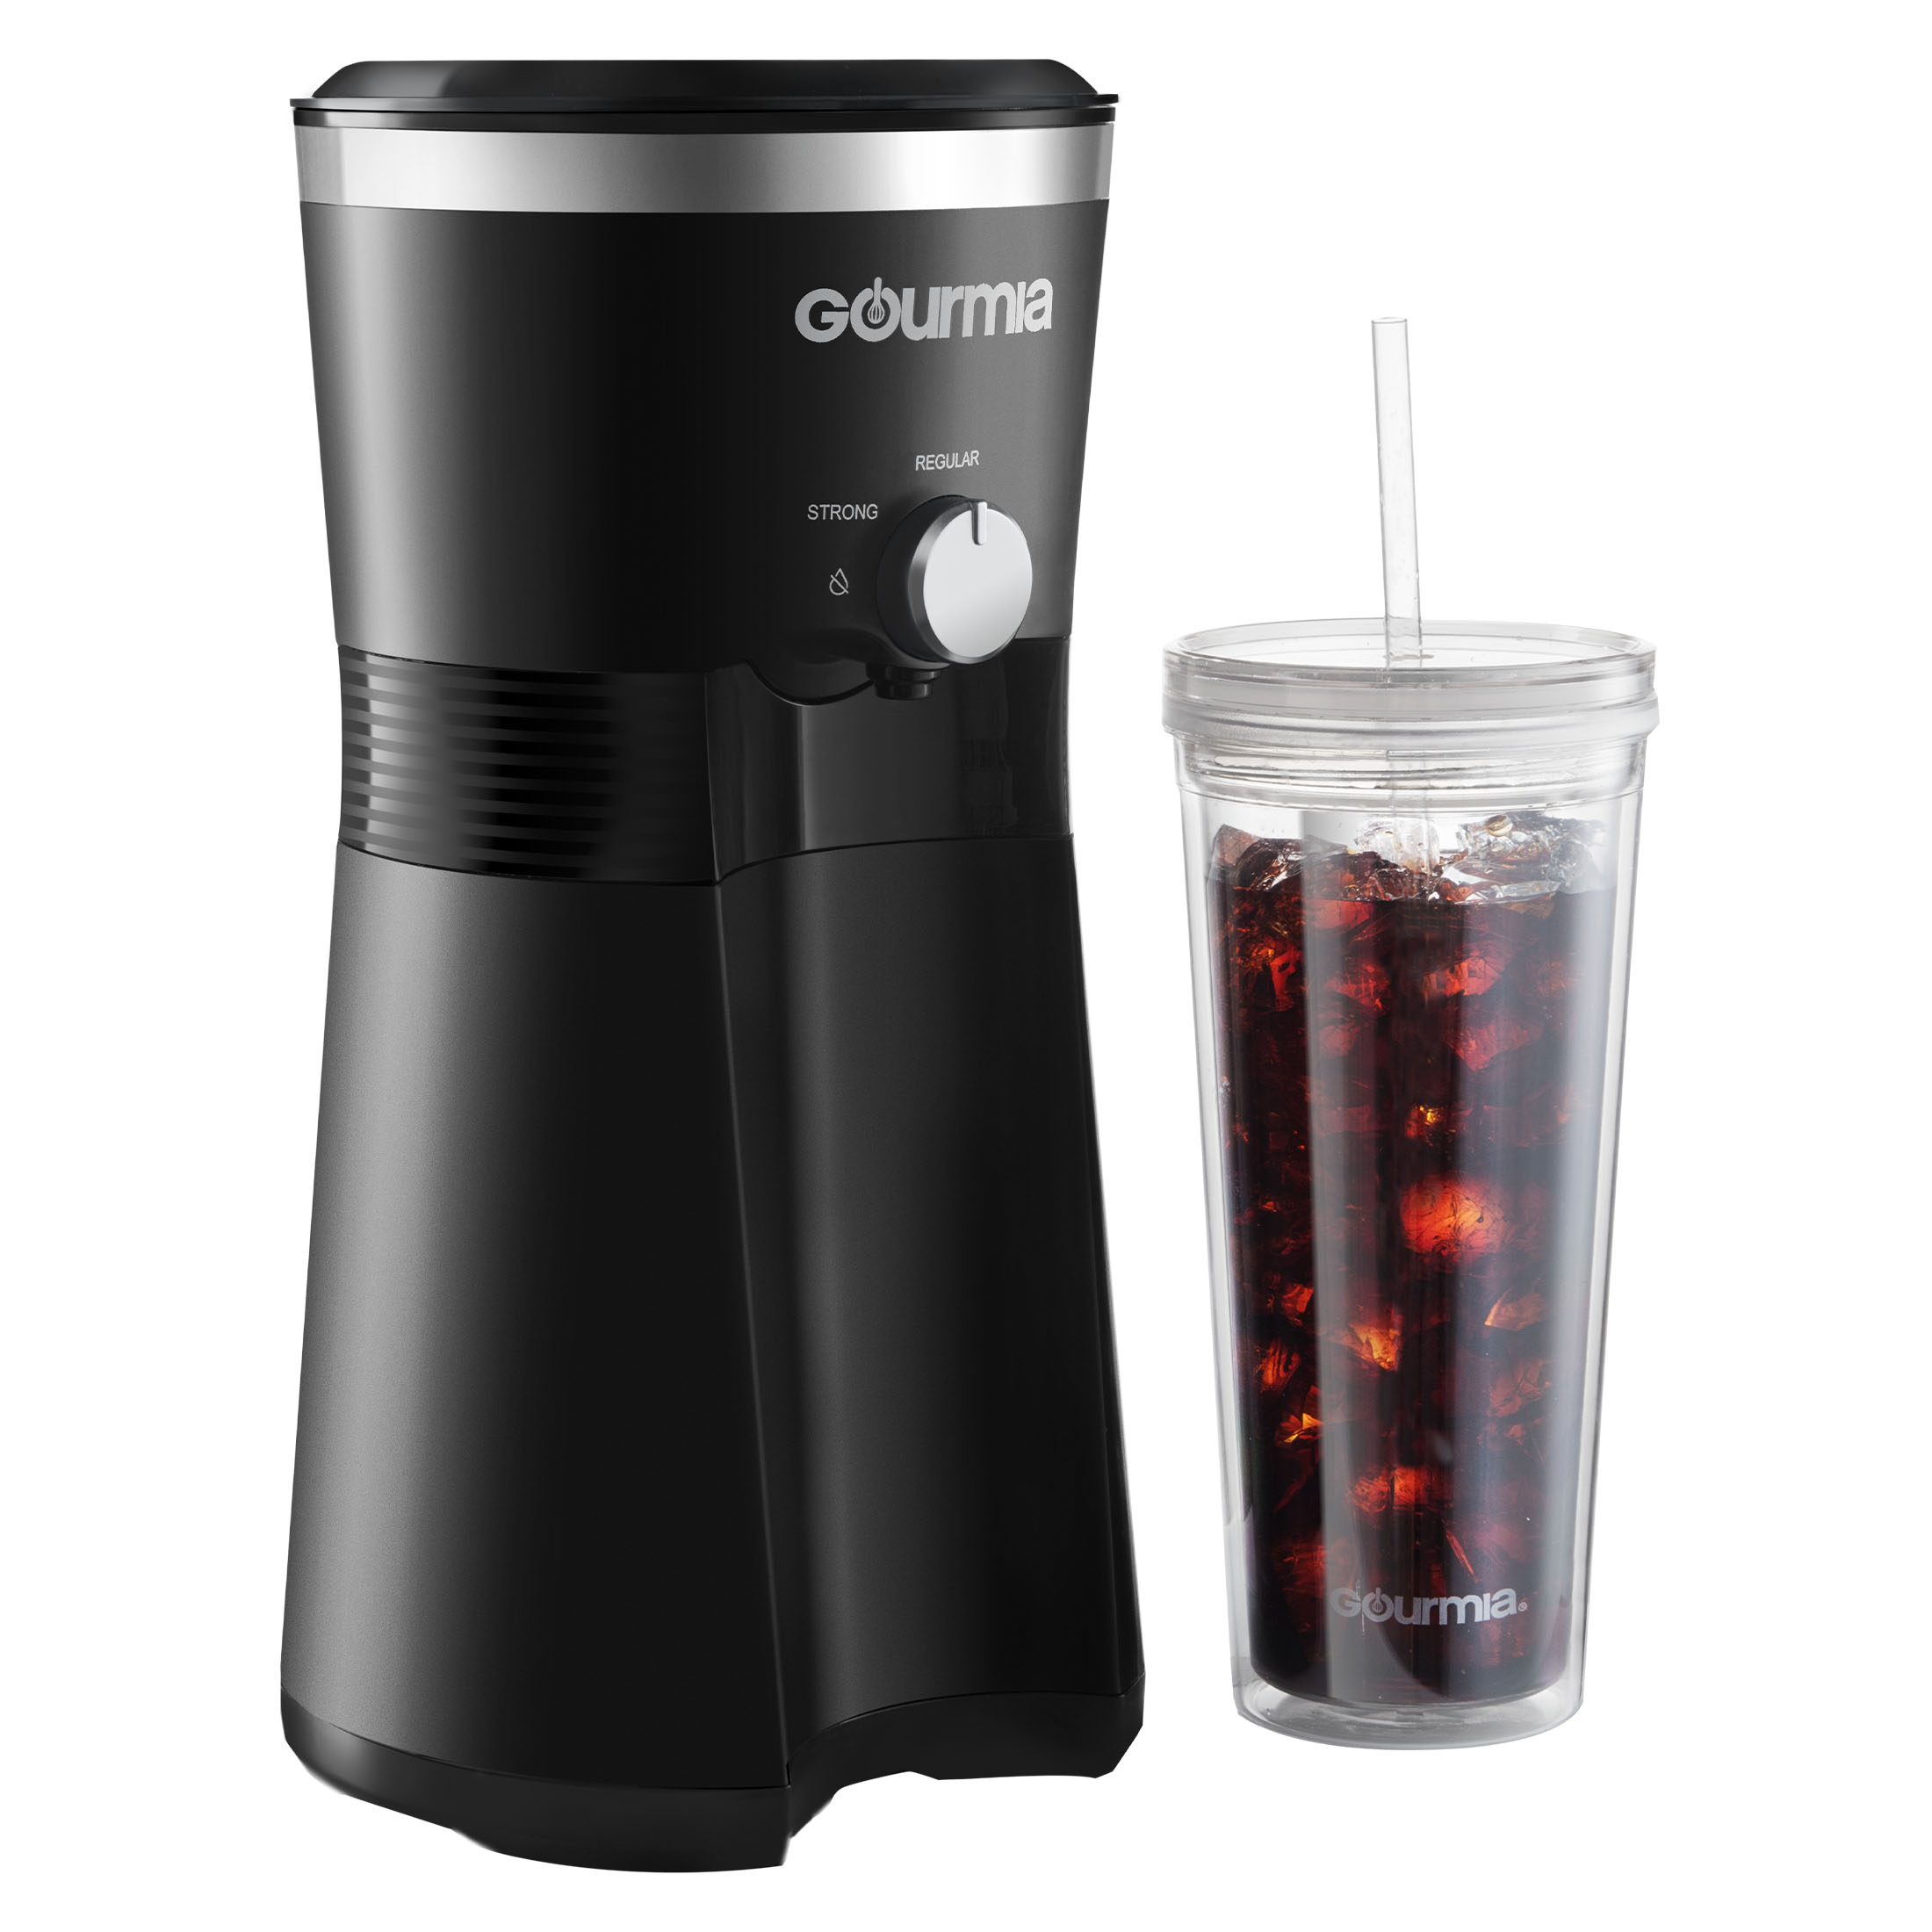 Gourmia Iced Coffee Maker with 25 fl oz. Reusable Tumbler, Black - image 6 of 7